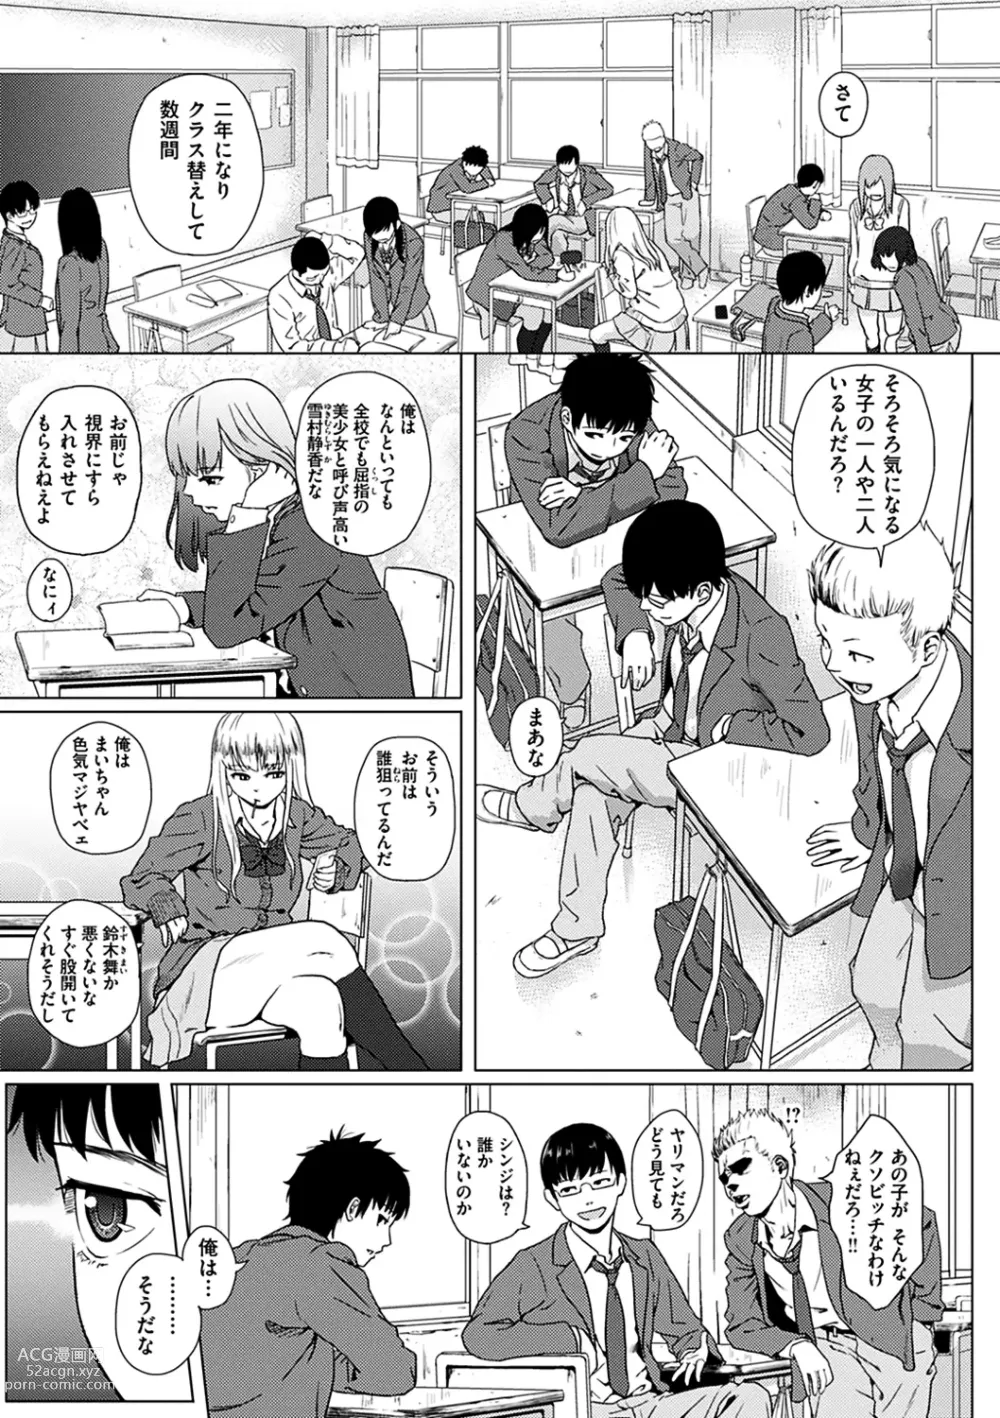 Page 5 of manga Kimi dake ni - I Only Love You...